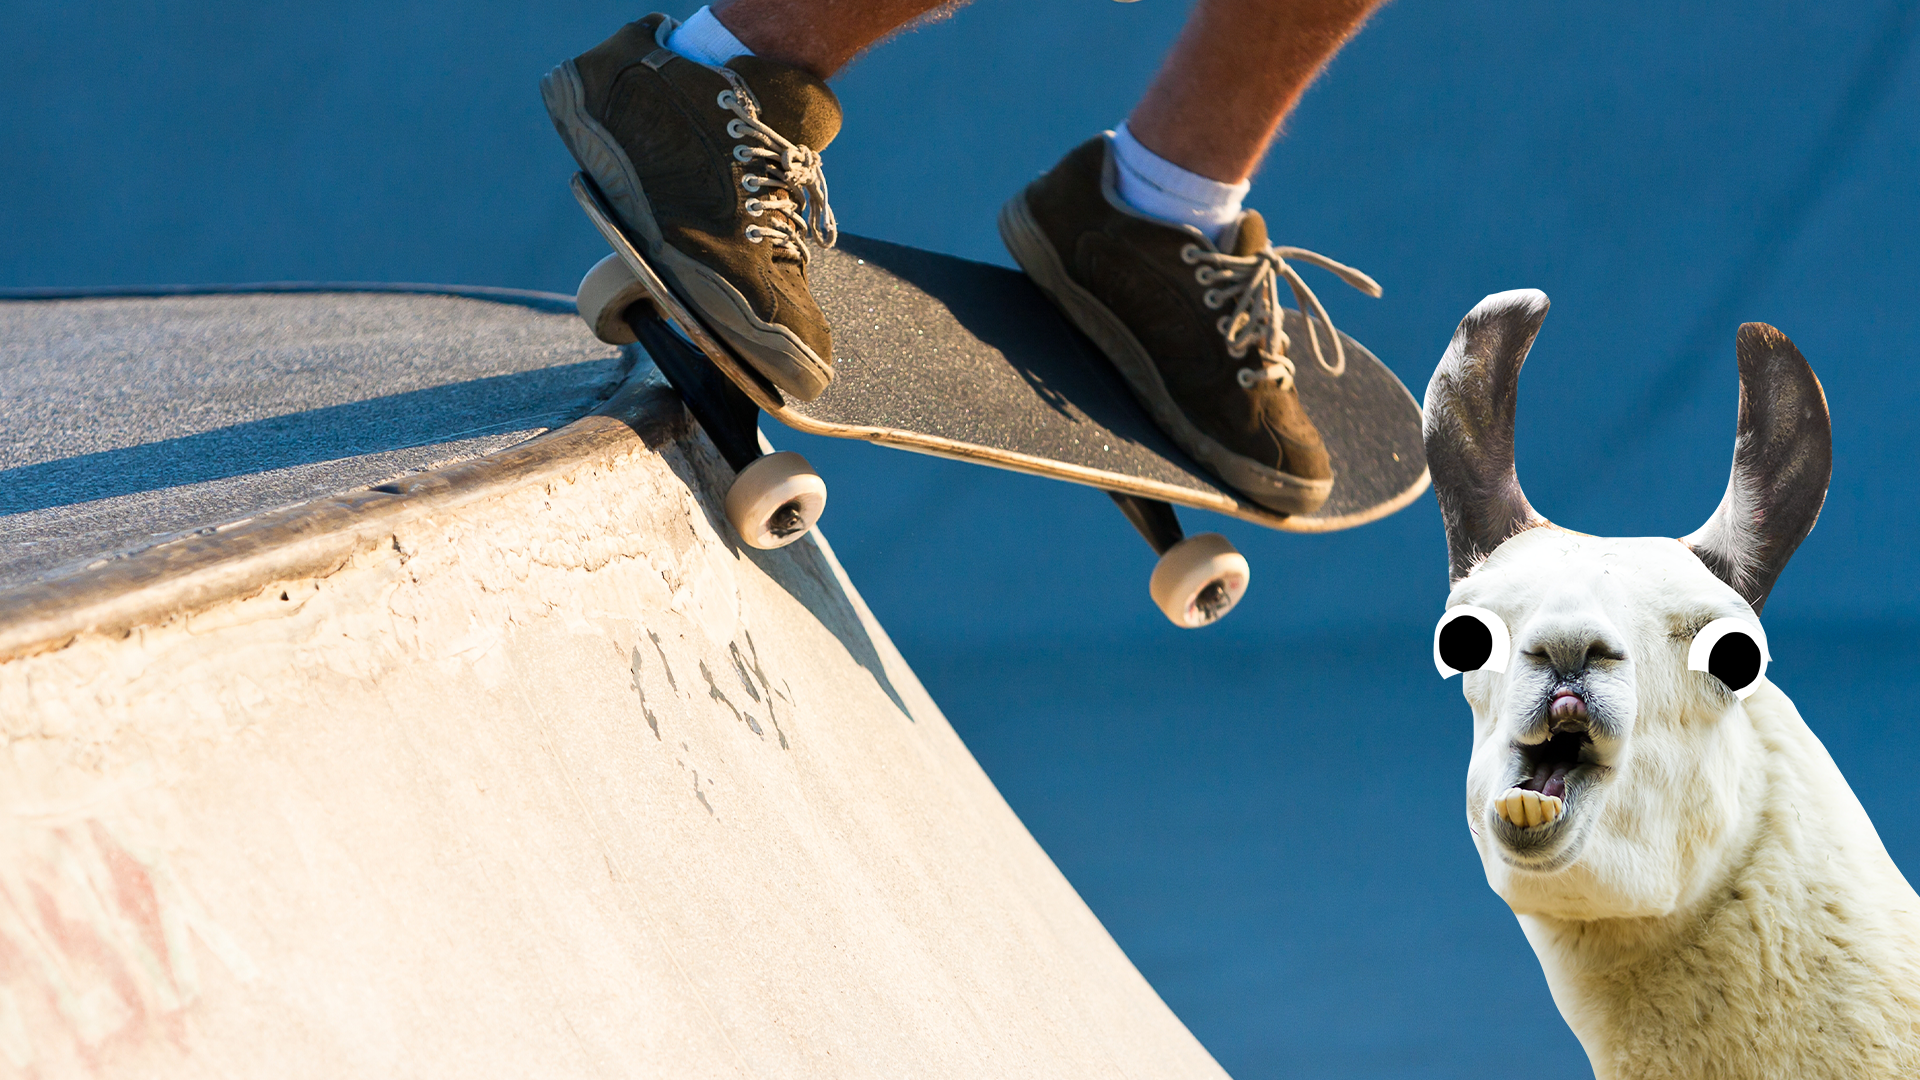 Skateboarder on ramp with derpy llama 